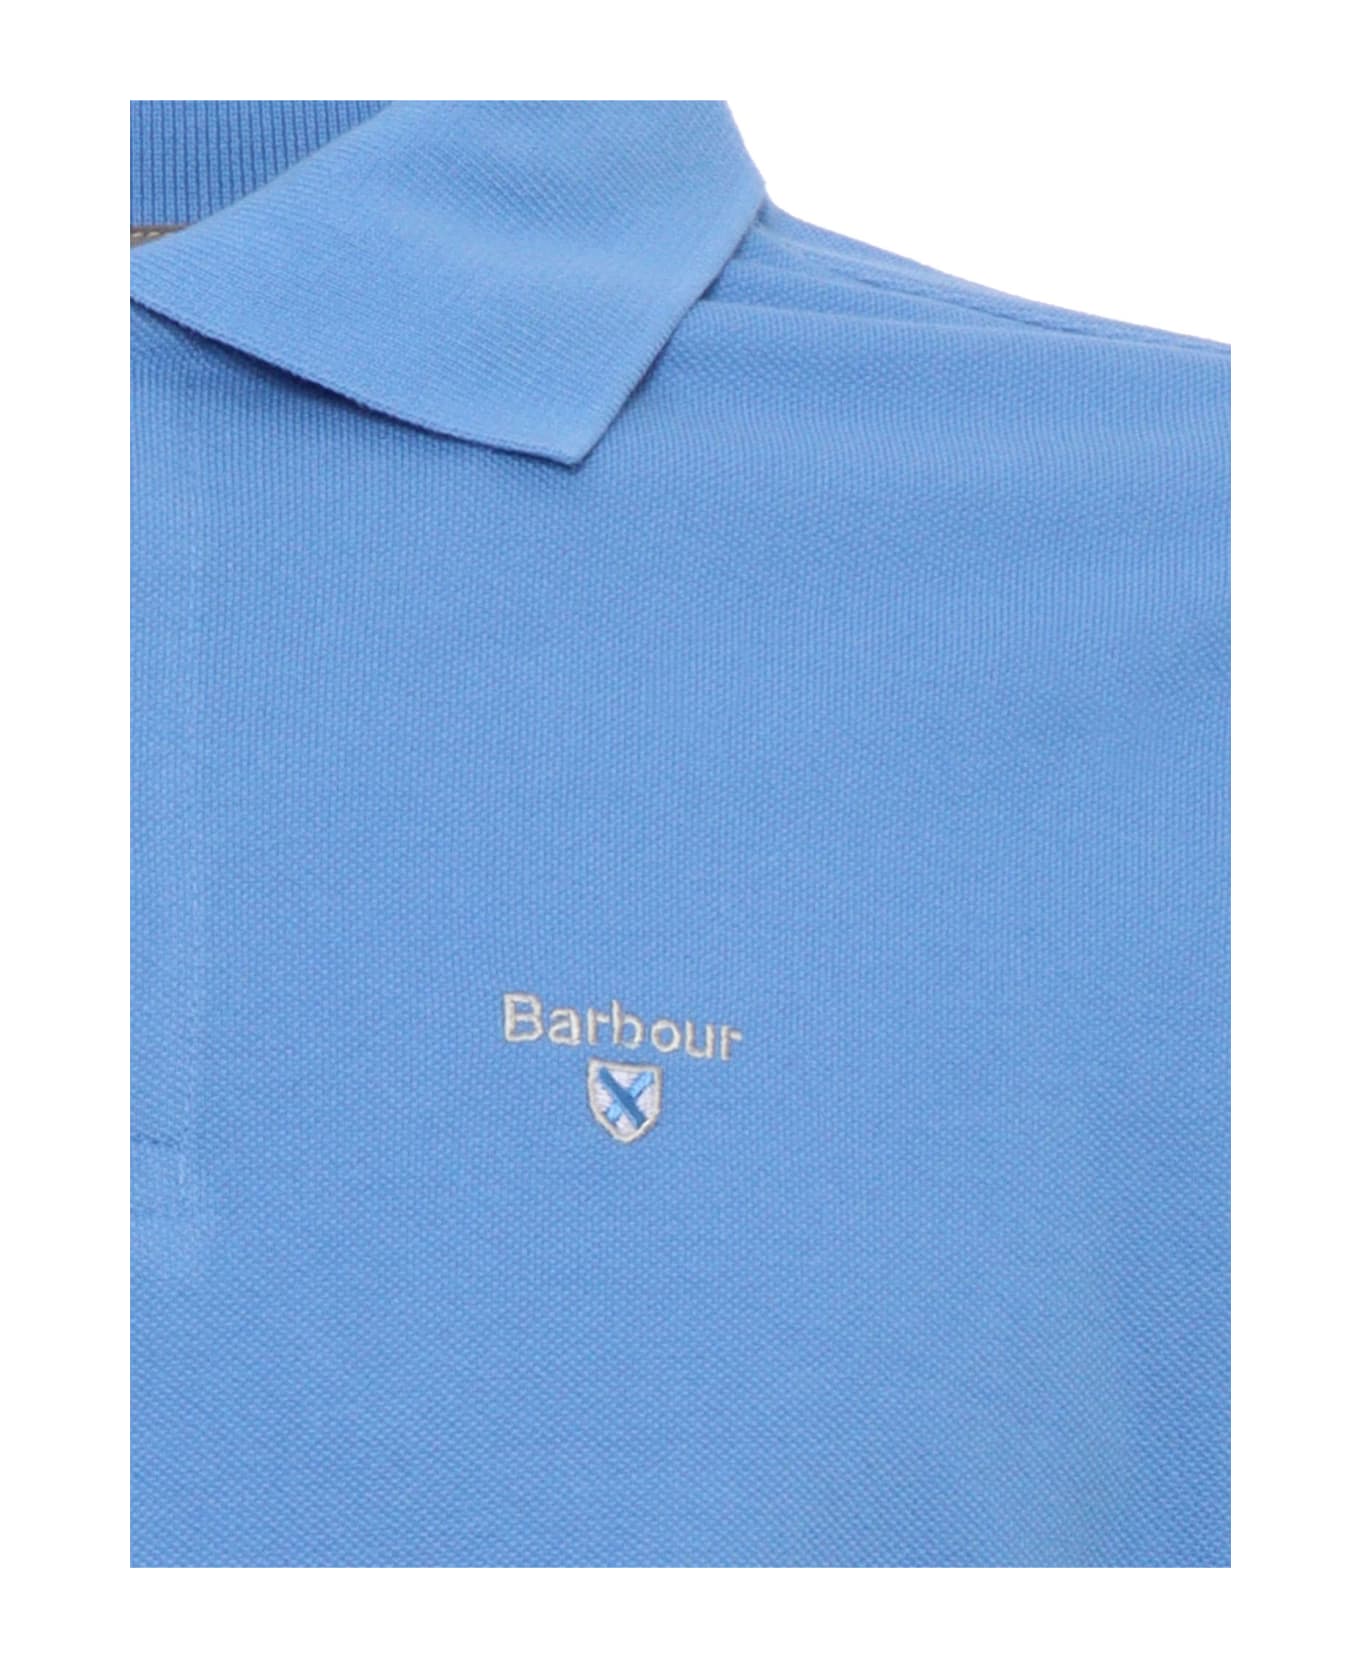 Barbour Light Blue Polo - Delft Blue